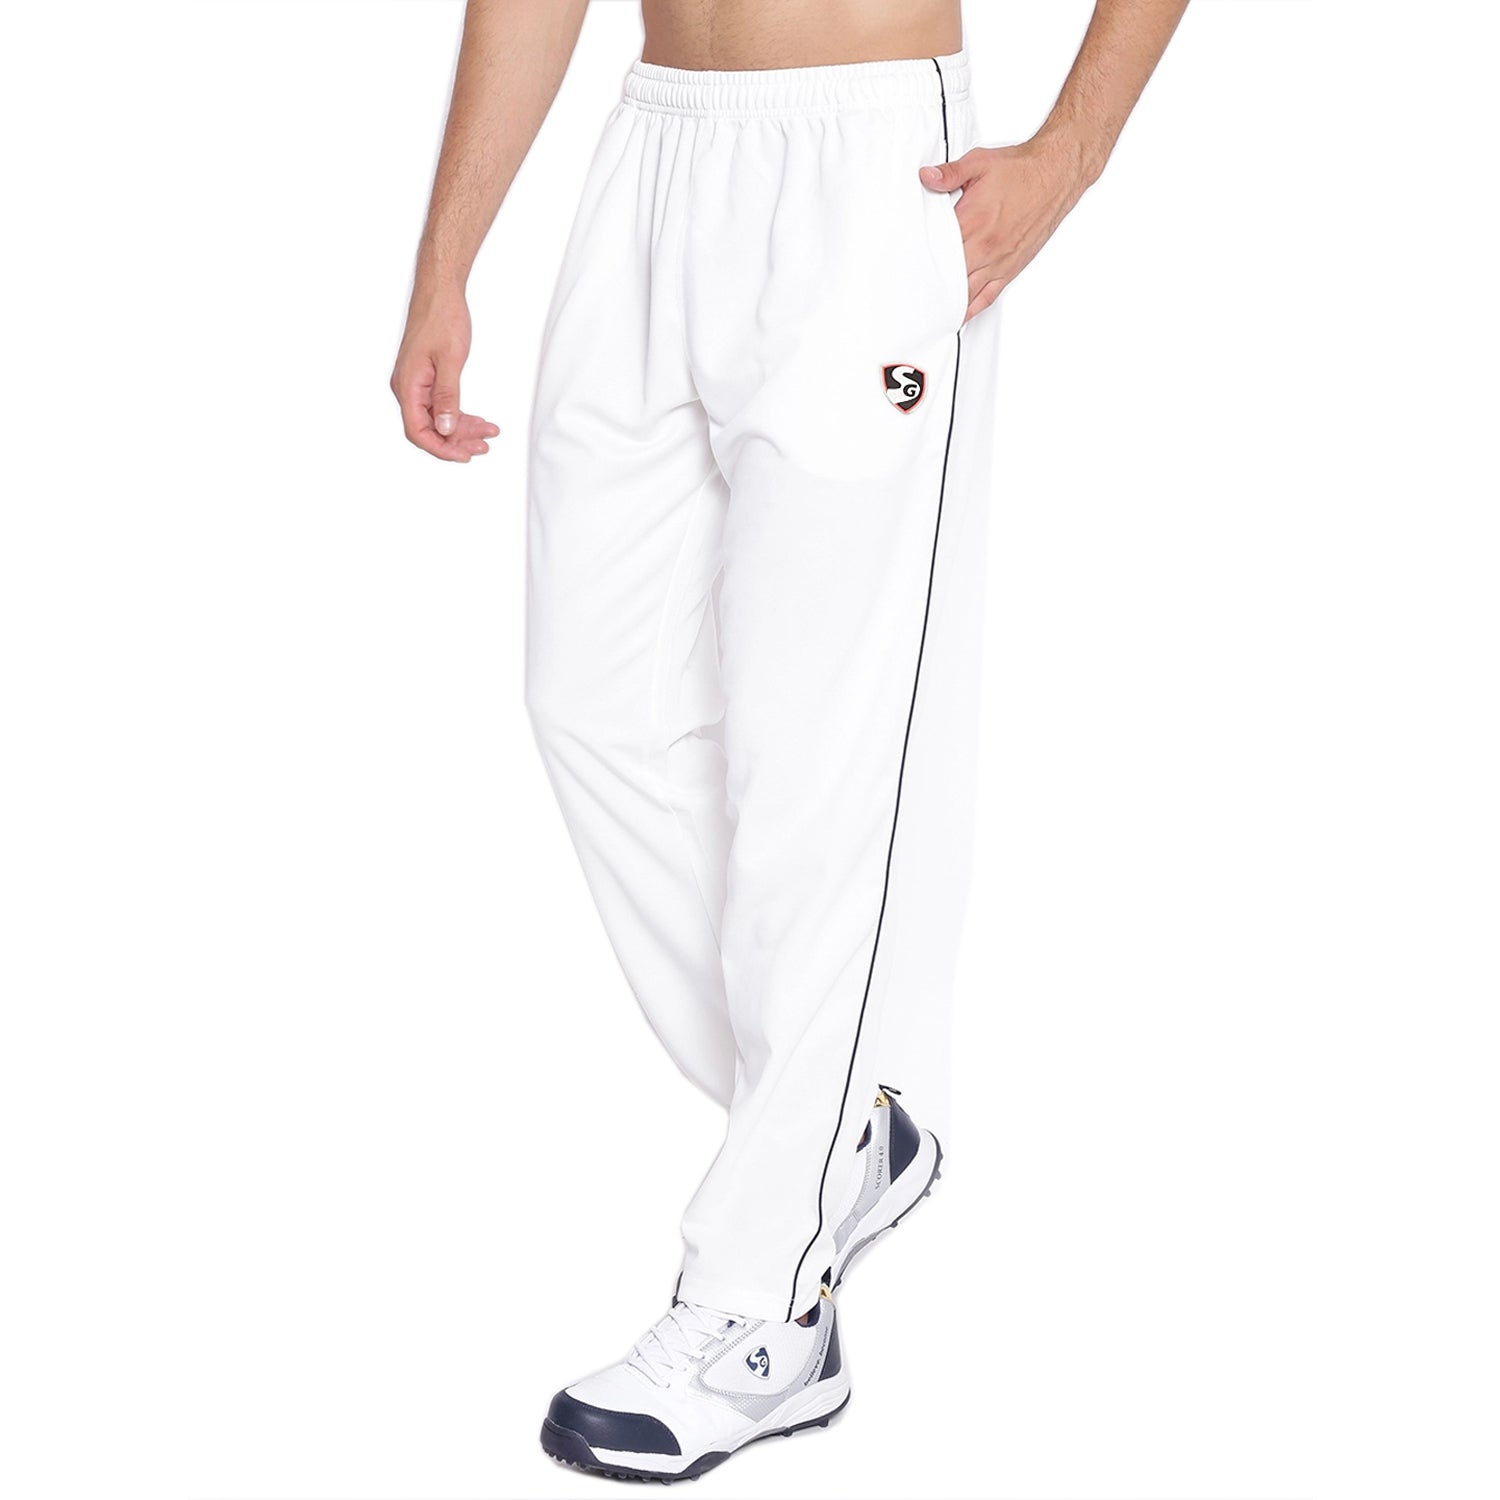 SG Century Juniors Cricket Trouser, White - Best Price online Prokicksports.com